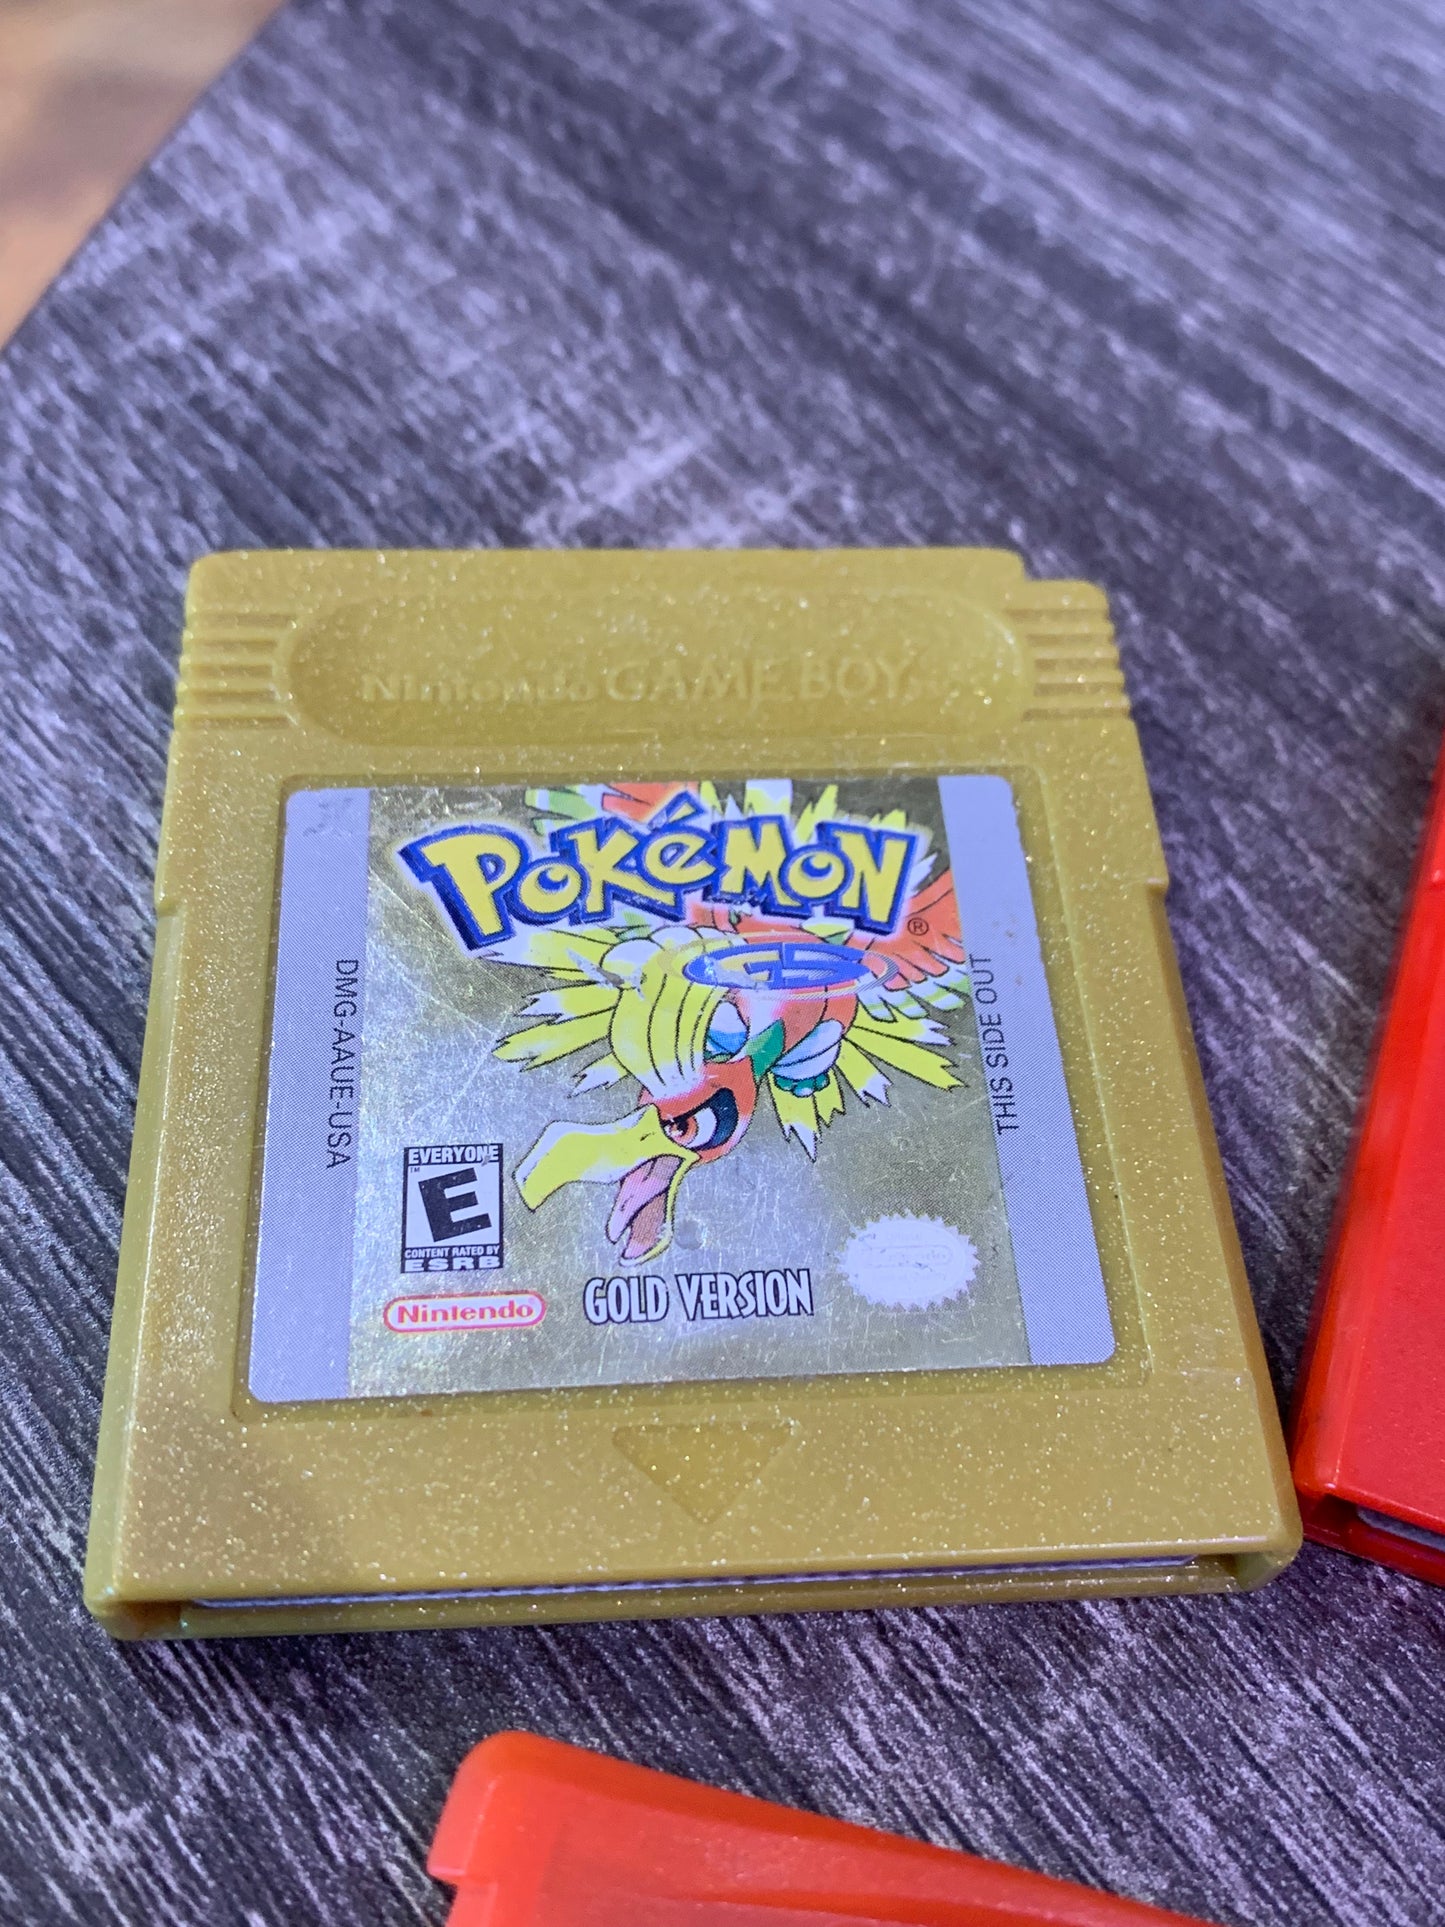 Pokémon gold GameBoy color